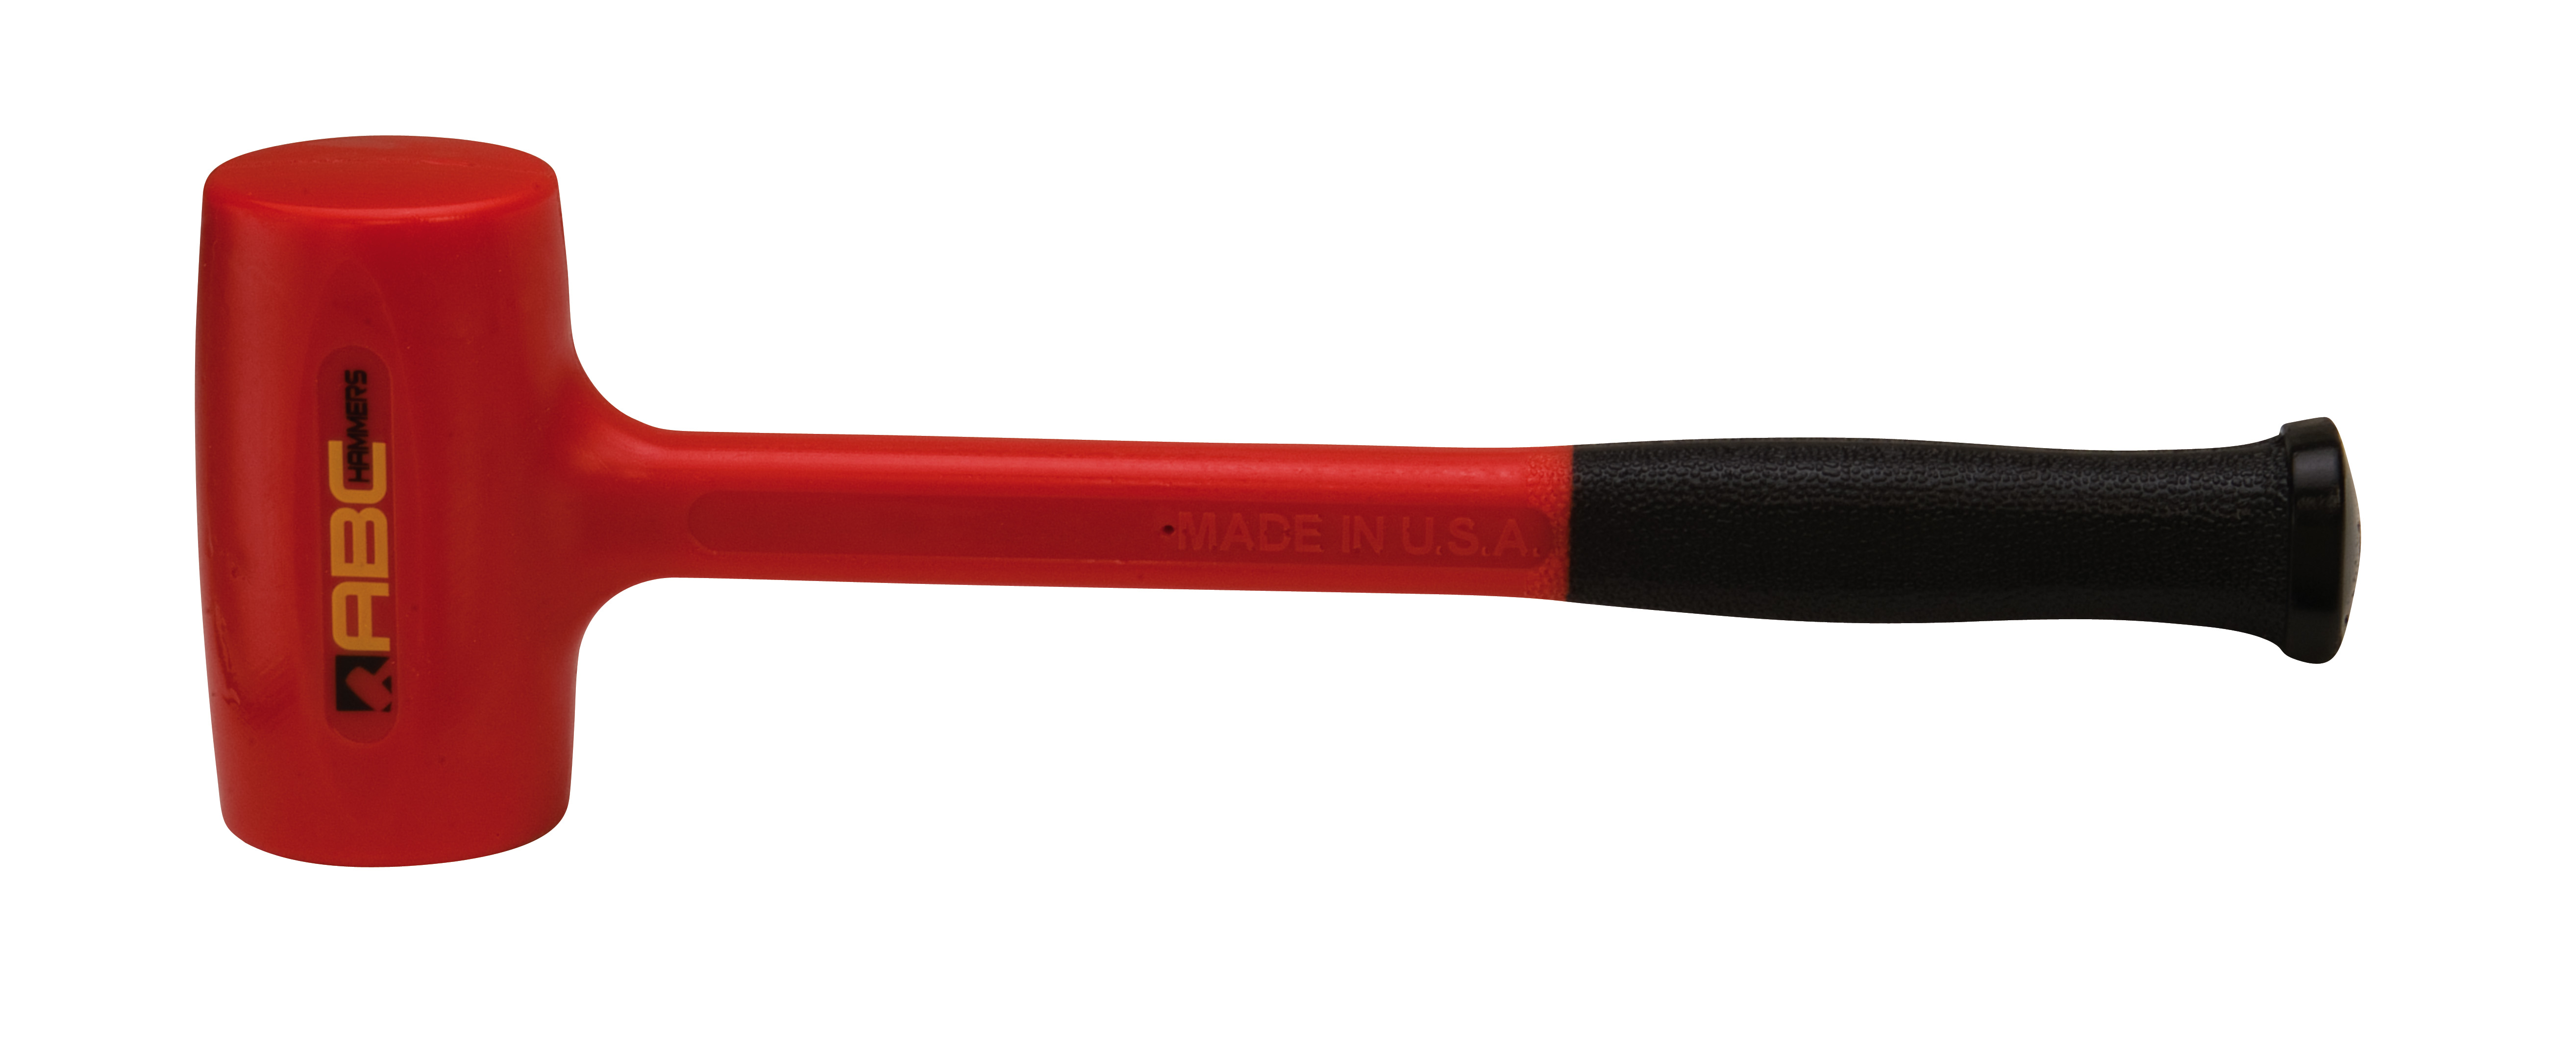 45 oz. Polyurethane Dead Blow Hammer - Overall Length 14.38"